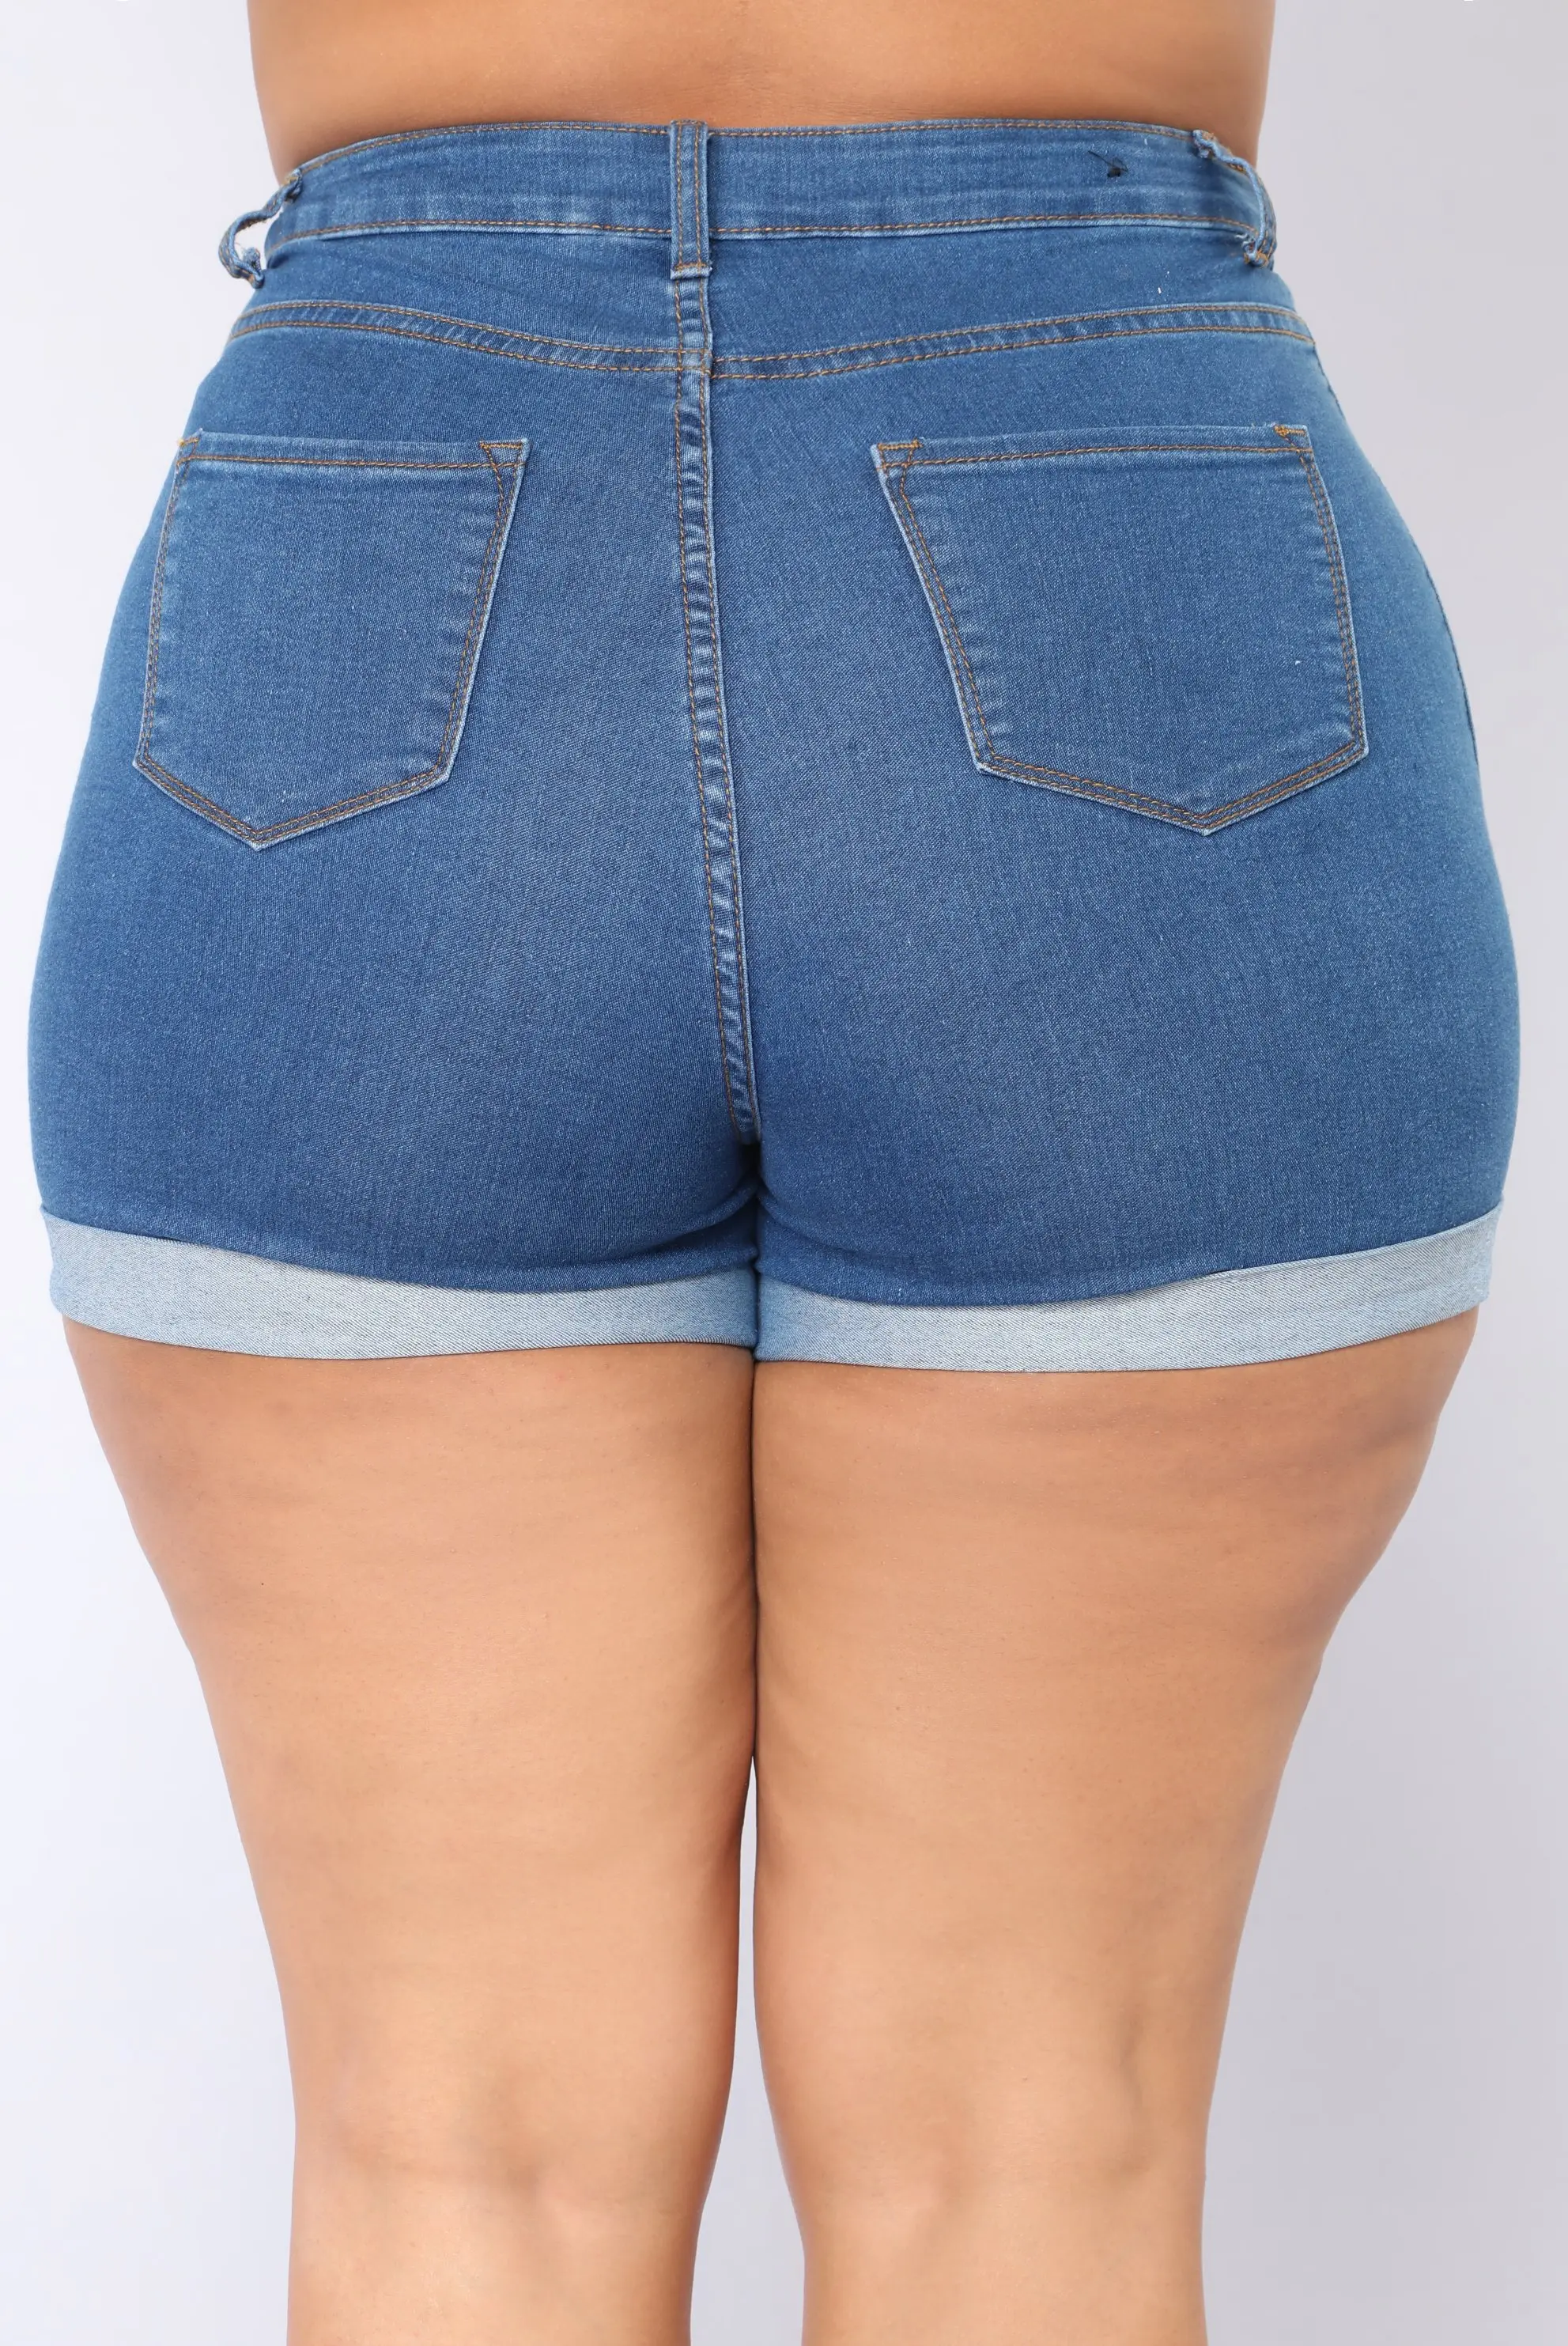 Sexy Skinny Turn Up Hot Oversize Denim Short Denim Jeans For Fat Girls Buy Oversize Denim